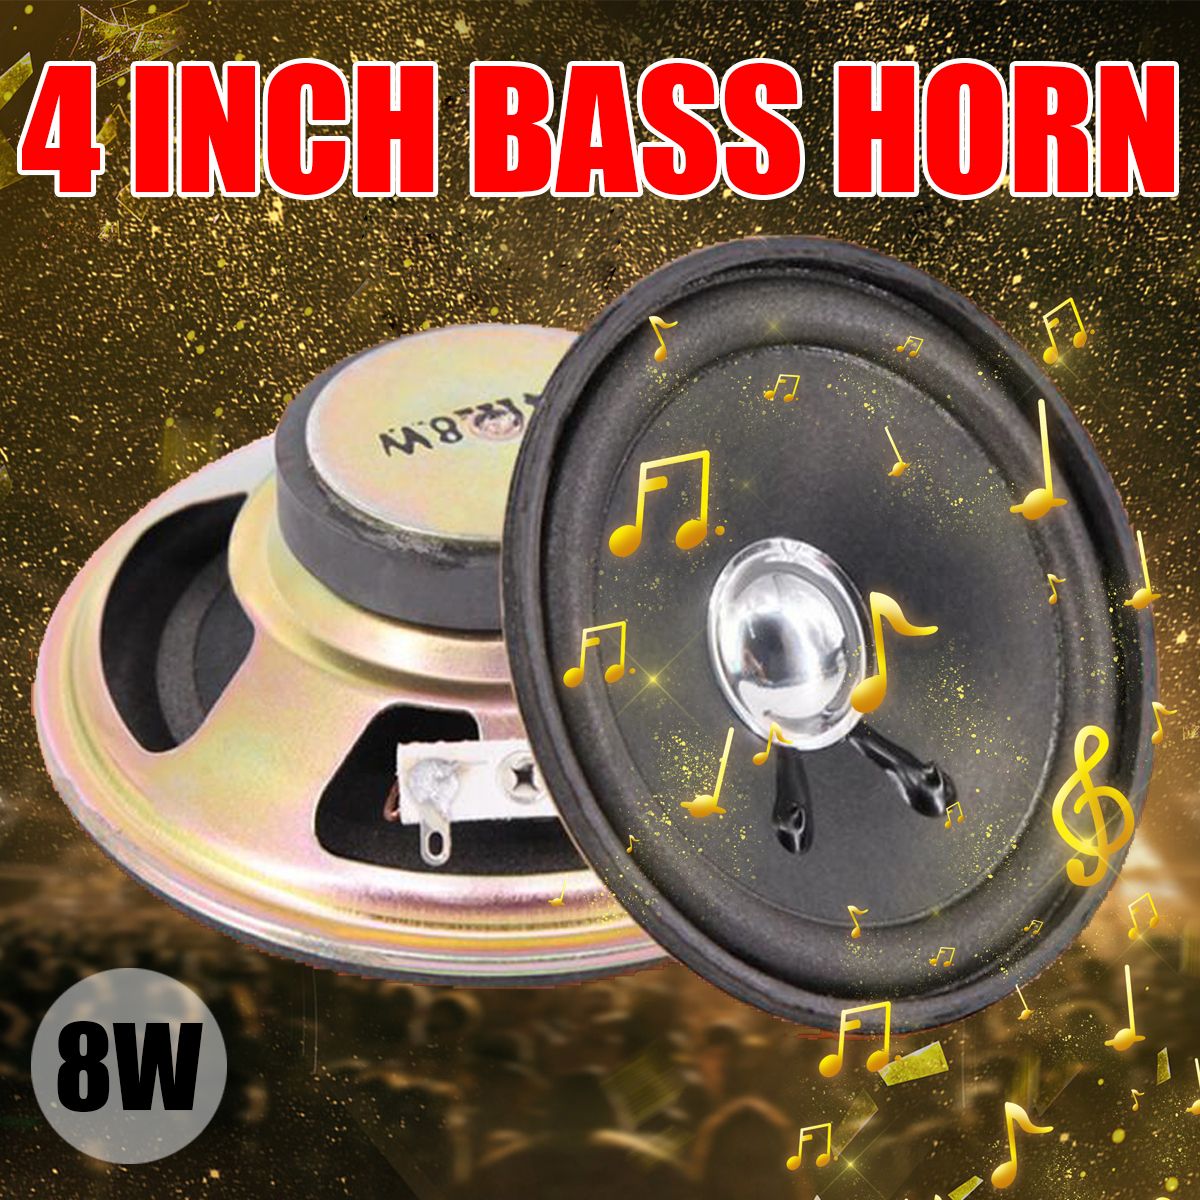 4-inch-Bass-Horn-Stereo-Subwoofer-Speaker-Loudspeaker-Audio-Woofer-Radio-DIY-1637883